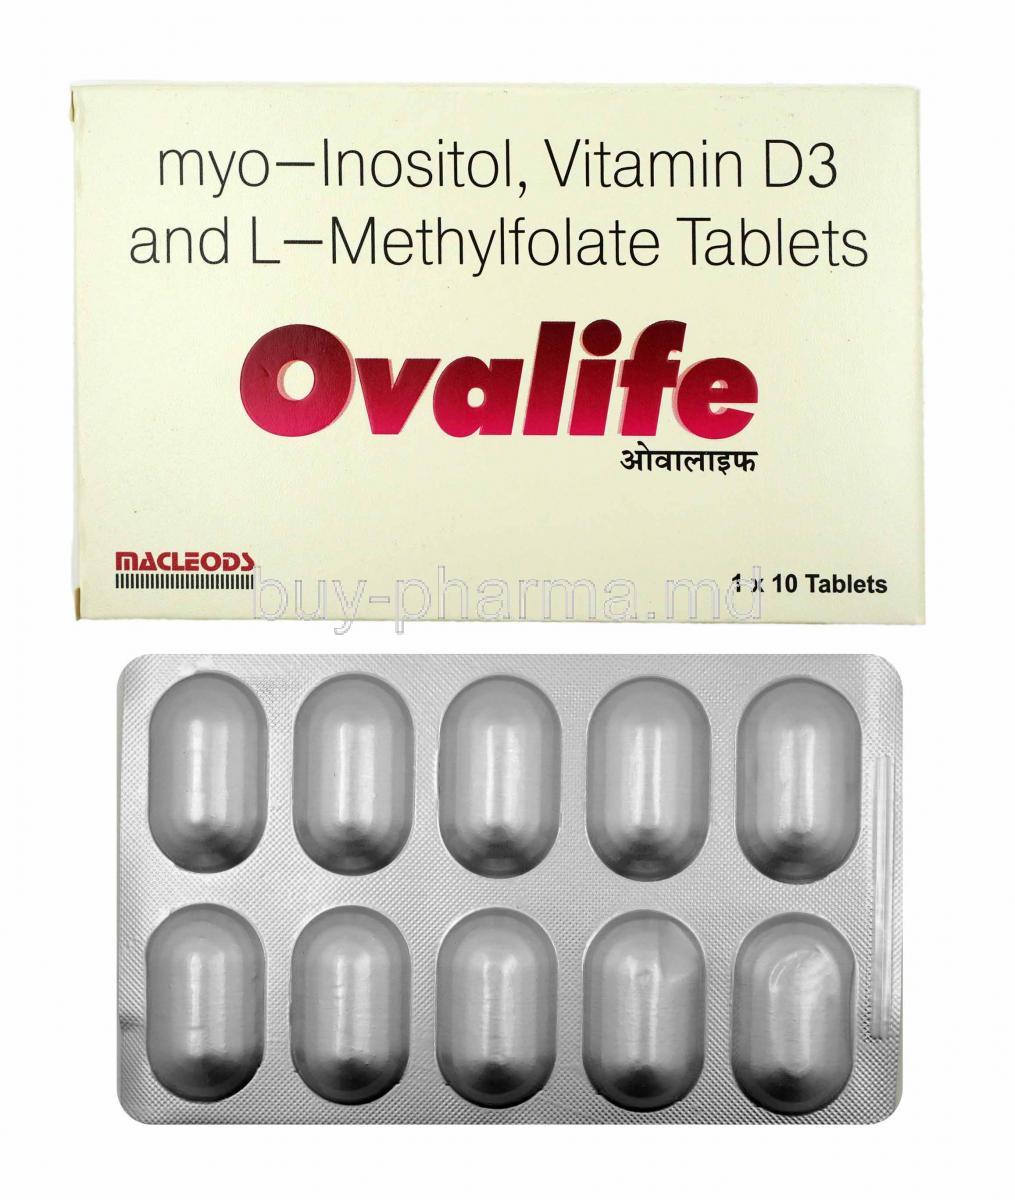 Ovalife, L-Methyl Folate, Myo- Inositol and Vitamin D3 box and tablets